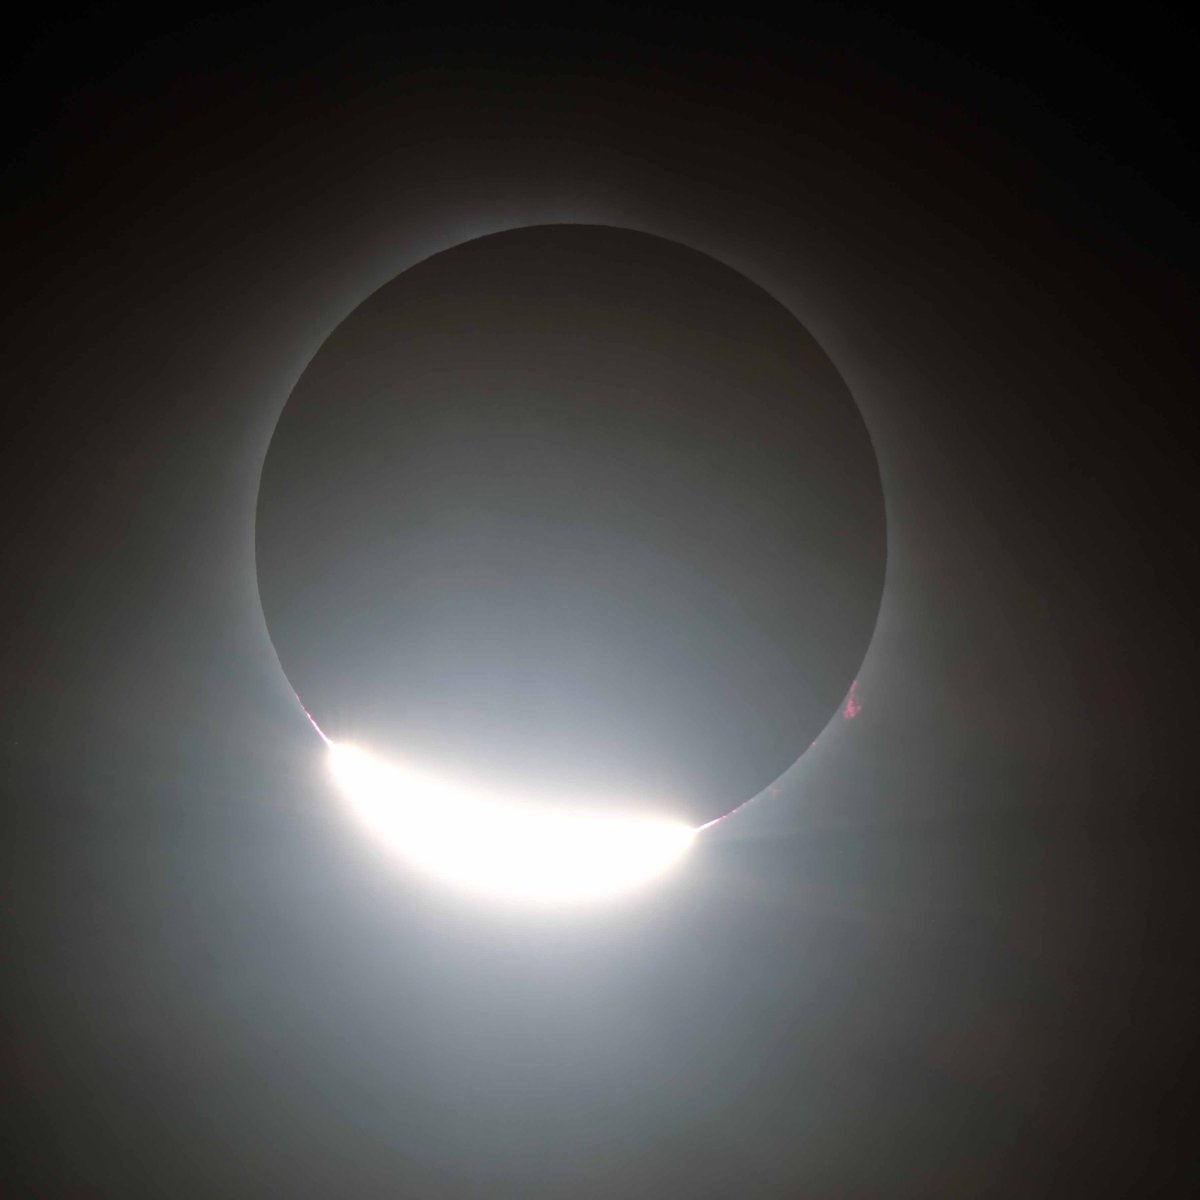 Solar eclipse'd #eclipse #MiamiOH @miamiuniversity